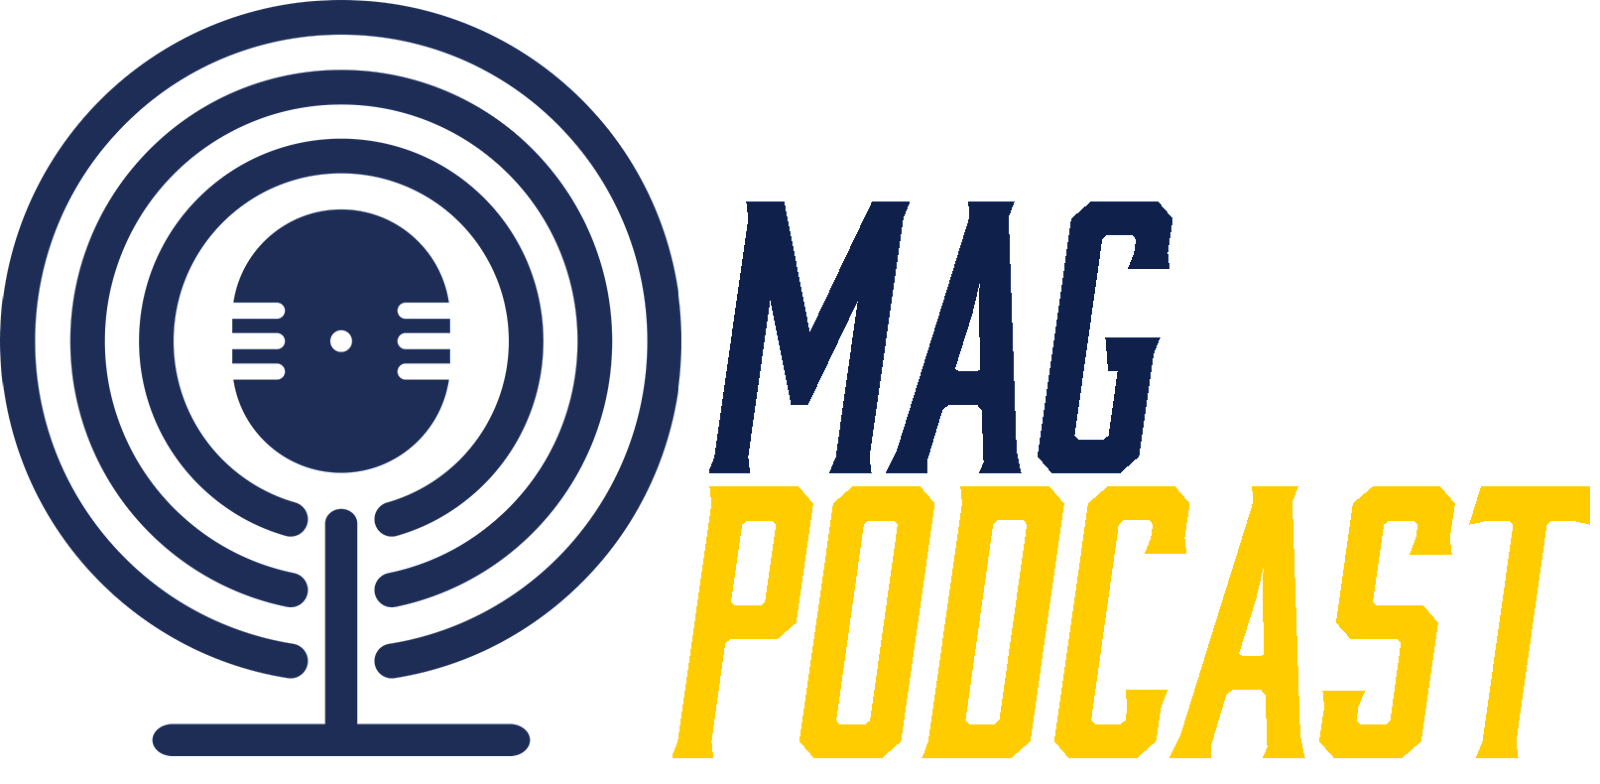 MagPodcast